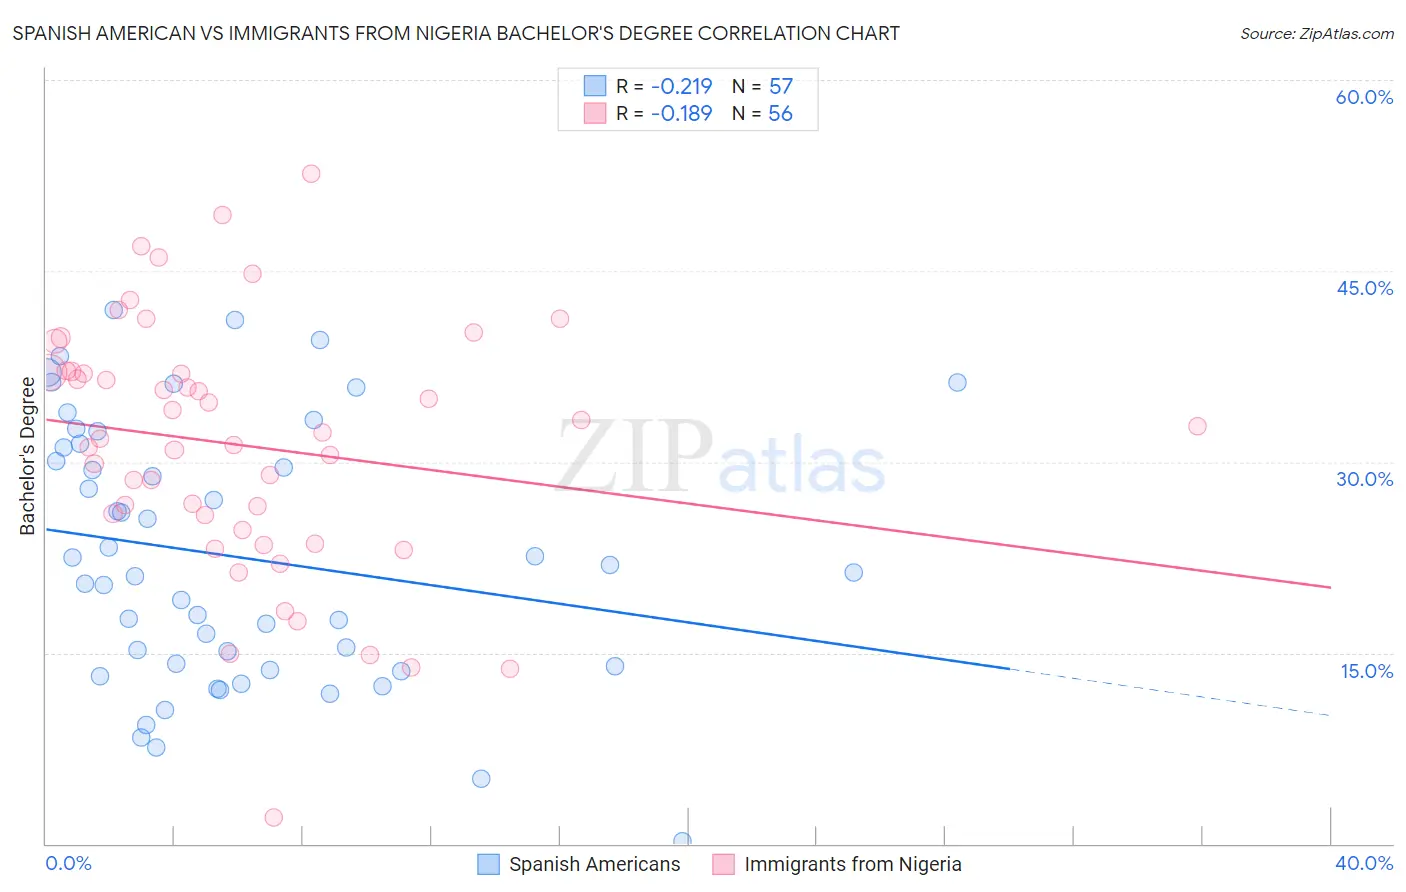 Spanish American vs Immigrants from Nigeria Bachelor's Degree